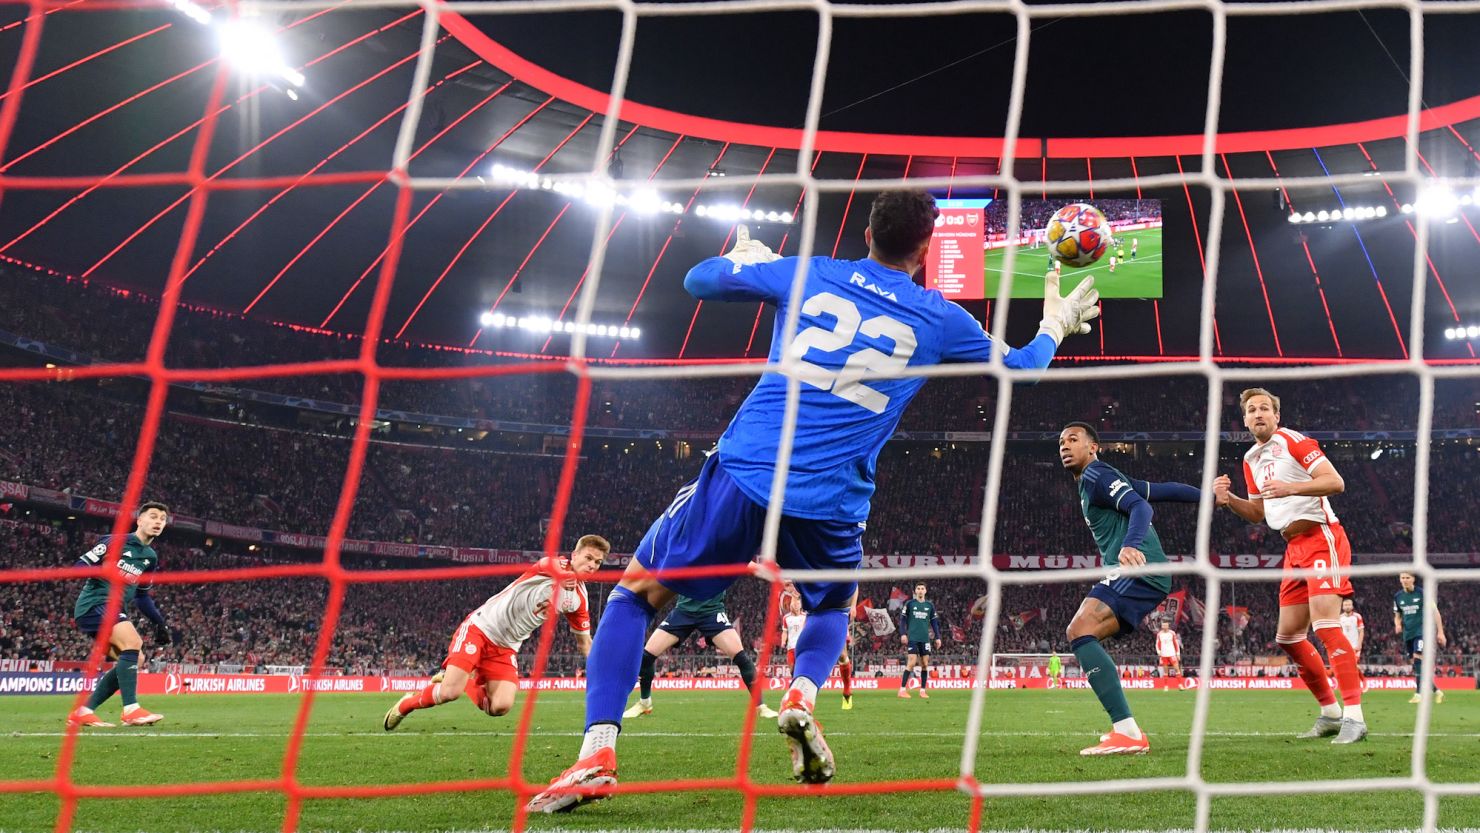 Joshua Kimmich scores Bayern Munich's winning goal in the Champions League quarterfinal second leg match against Arsenal.